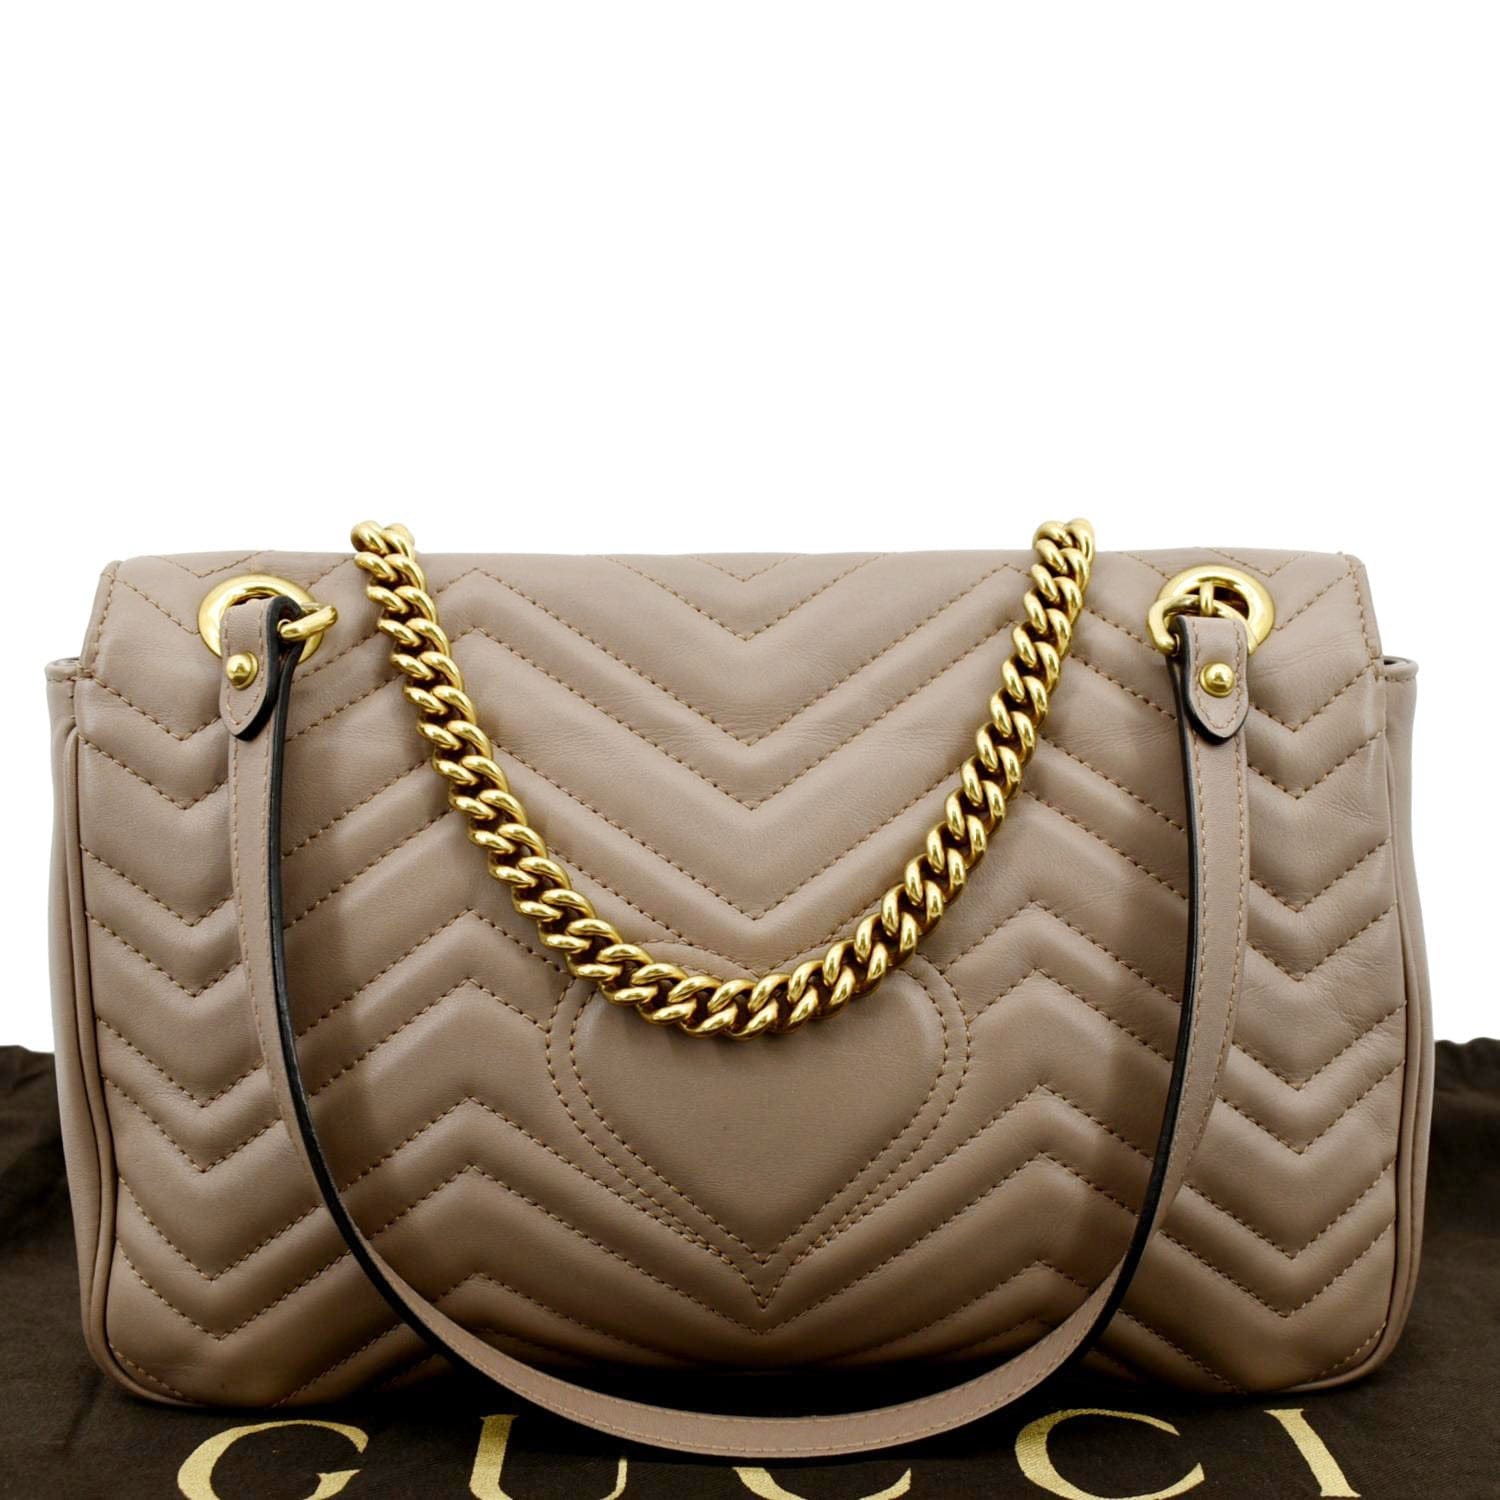 Shop GUCCI GG Marmont GG Marmont Matelasse Shoulder Bag by